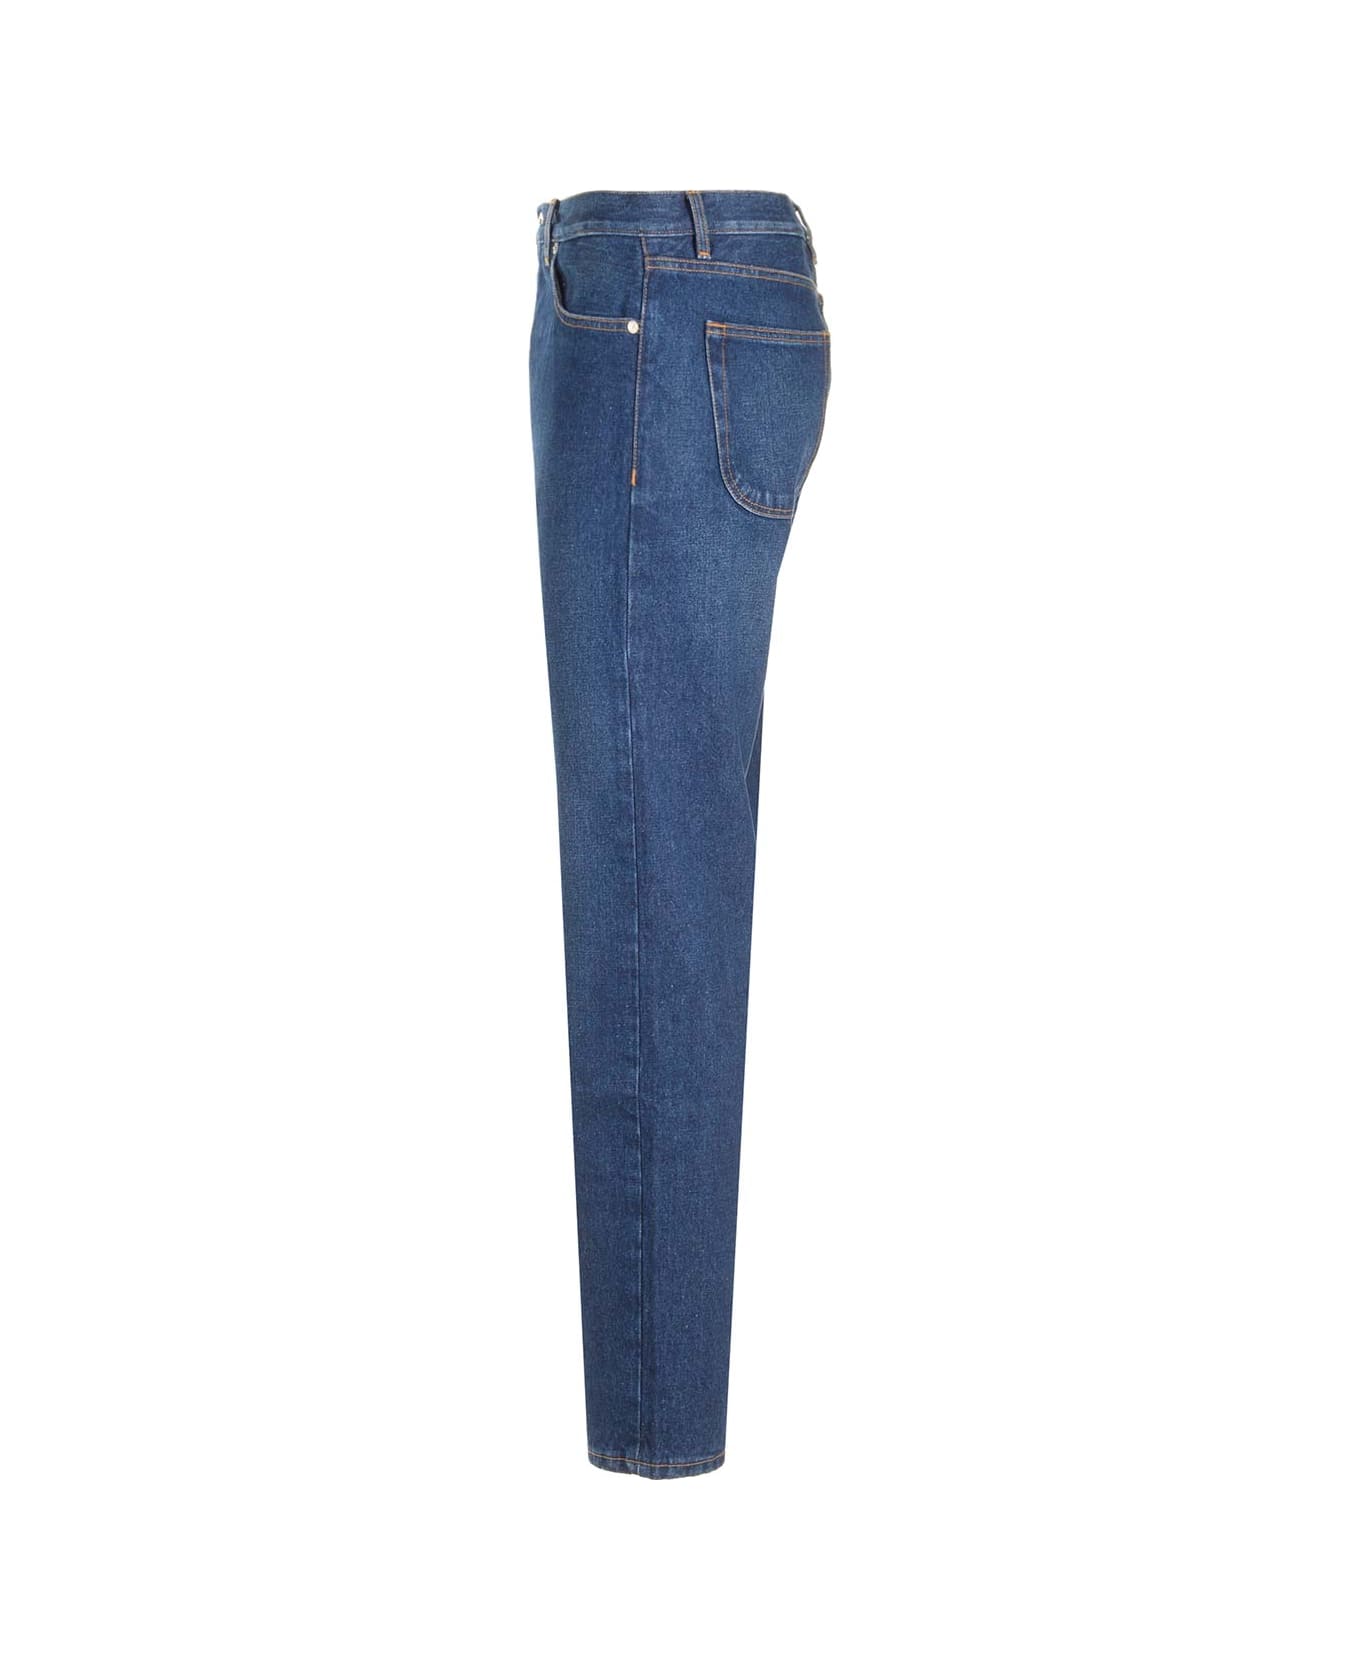 Off-White Tapered Leg Jeans - MEDIUM BLUE